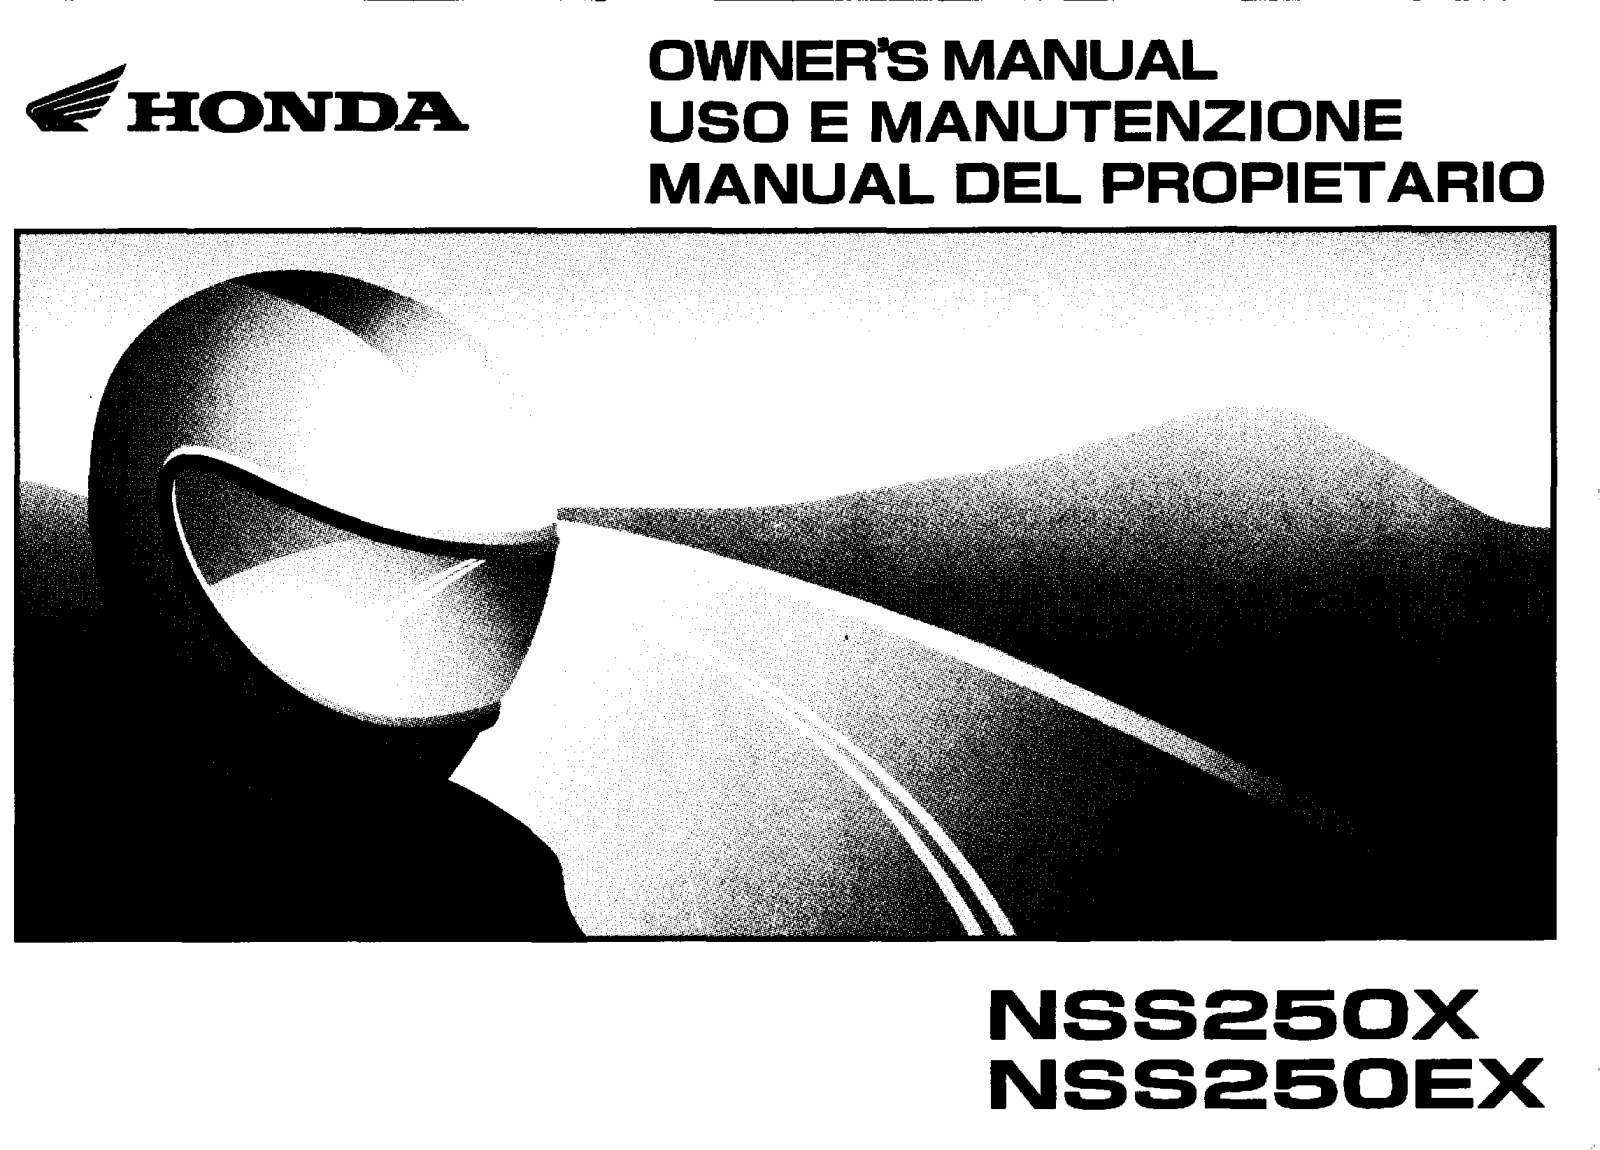 Honda NSS250X, NSS250EX Owner's Manual